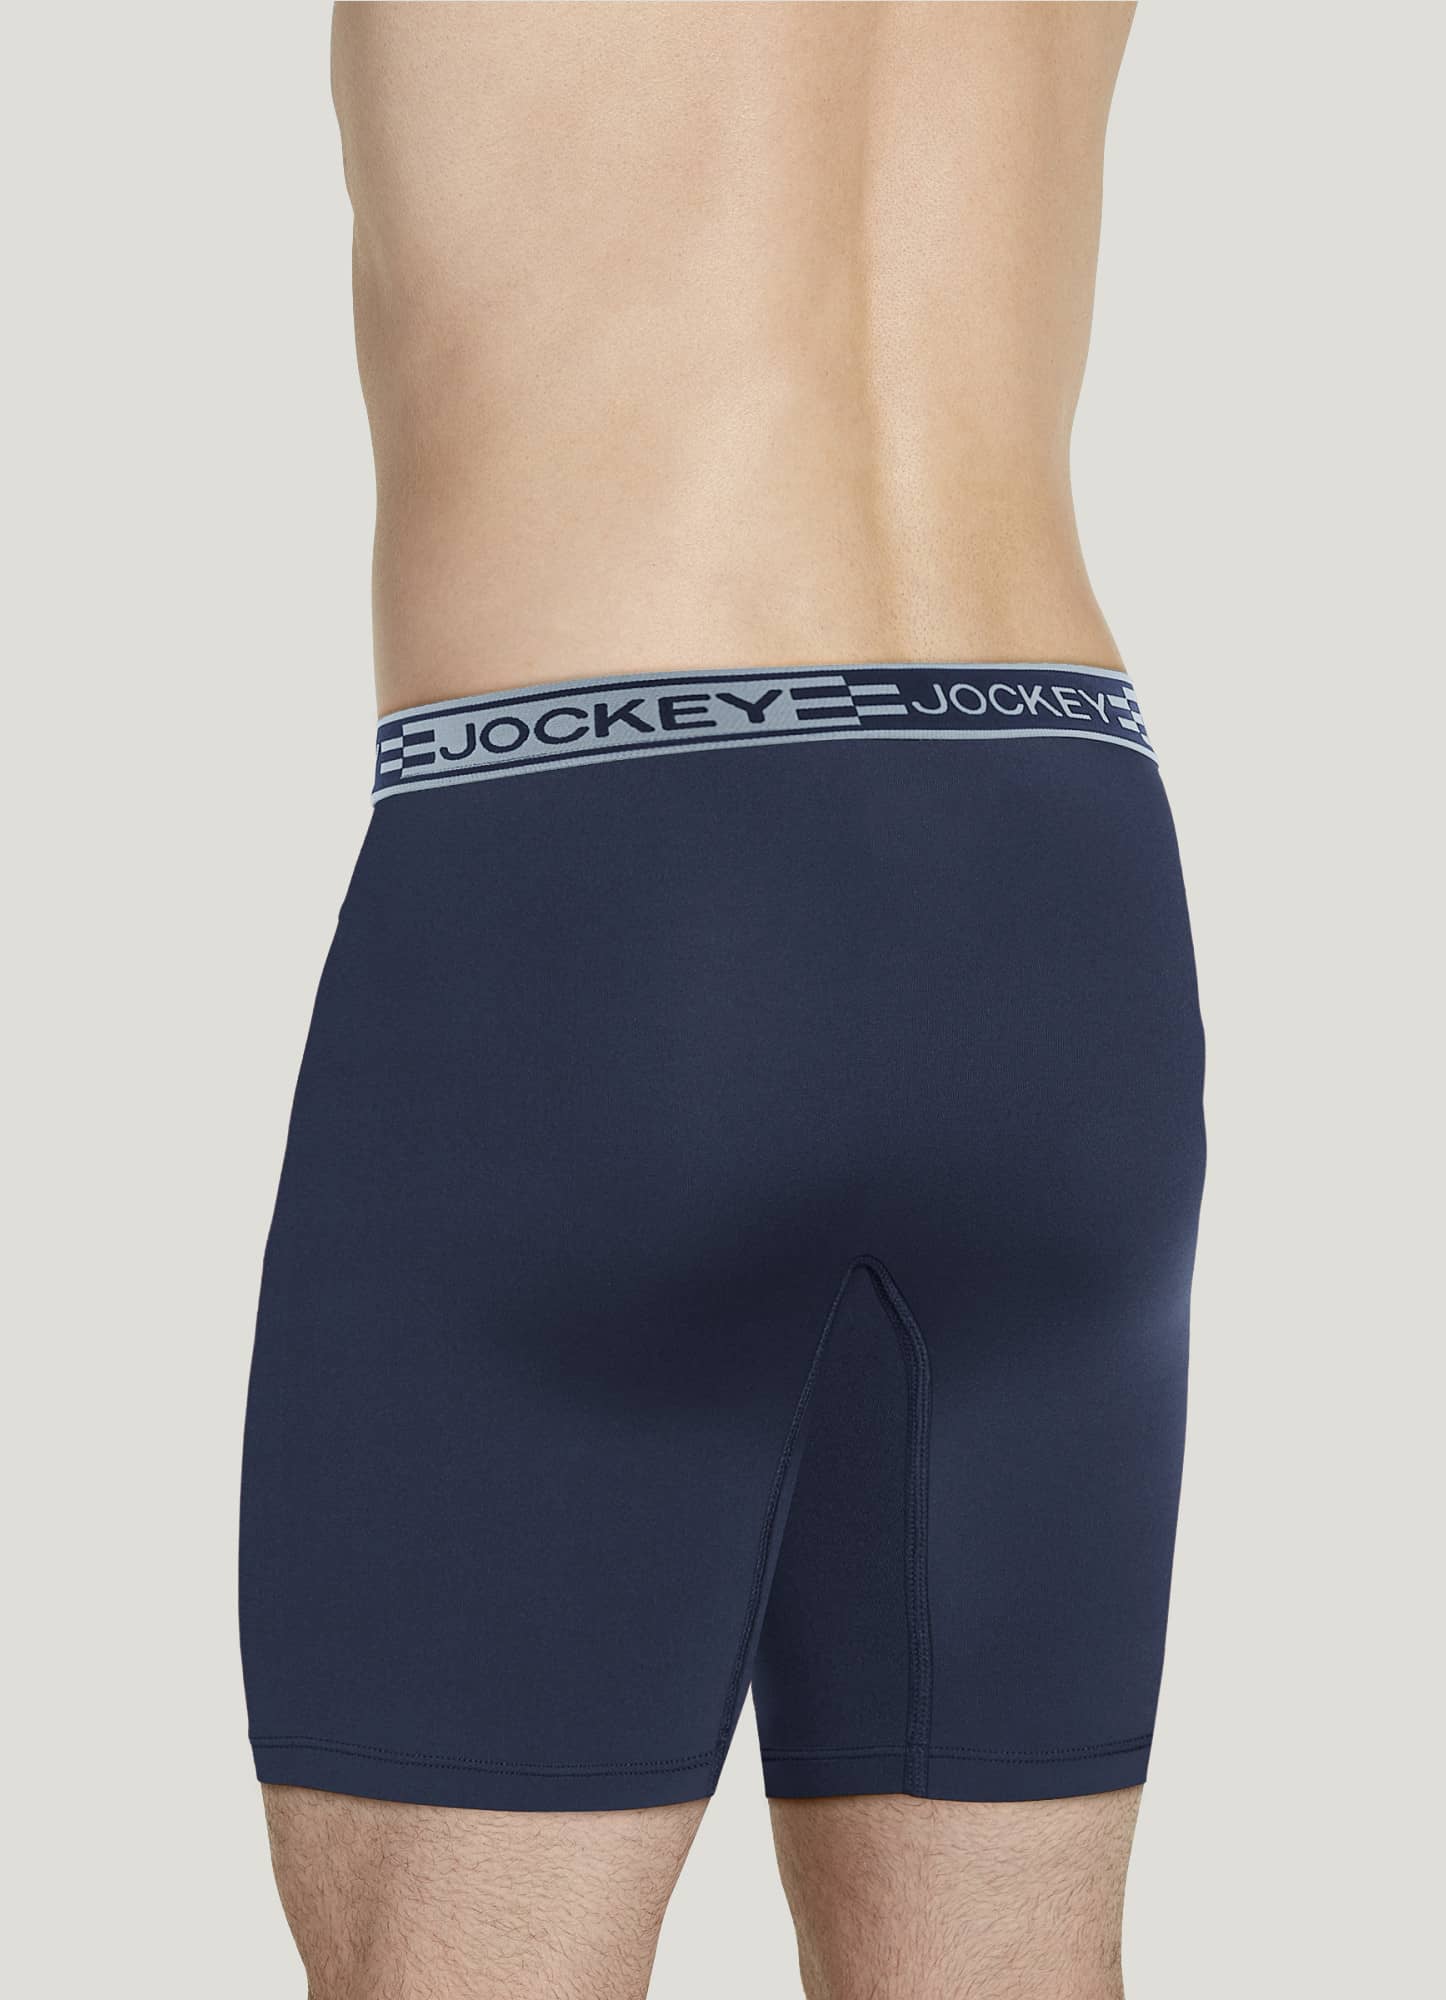 Jockey Men's Activewear Track Pant, Blue Velvet, Small 